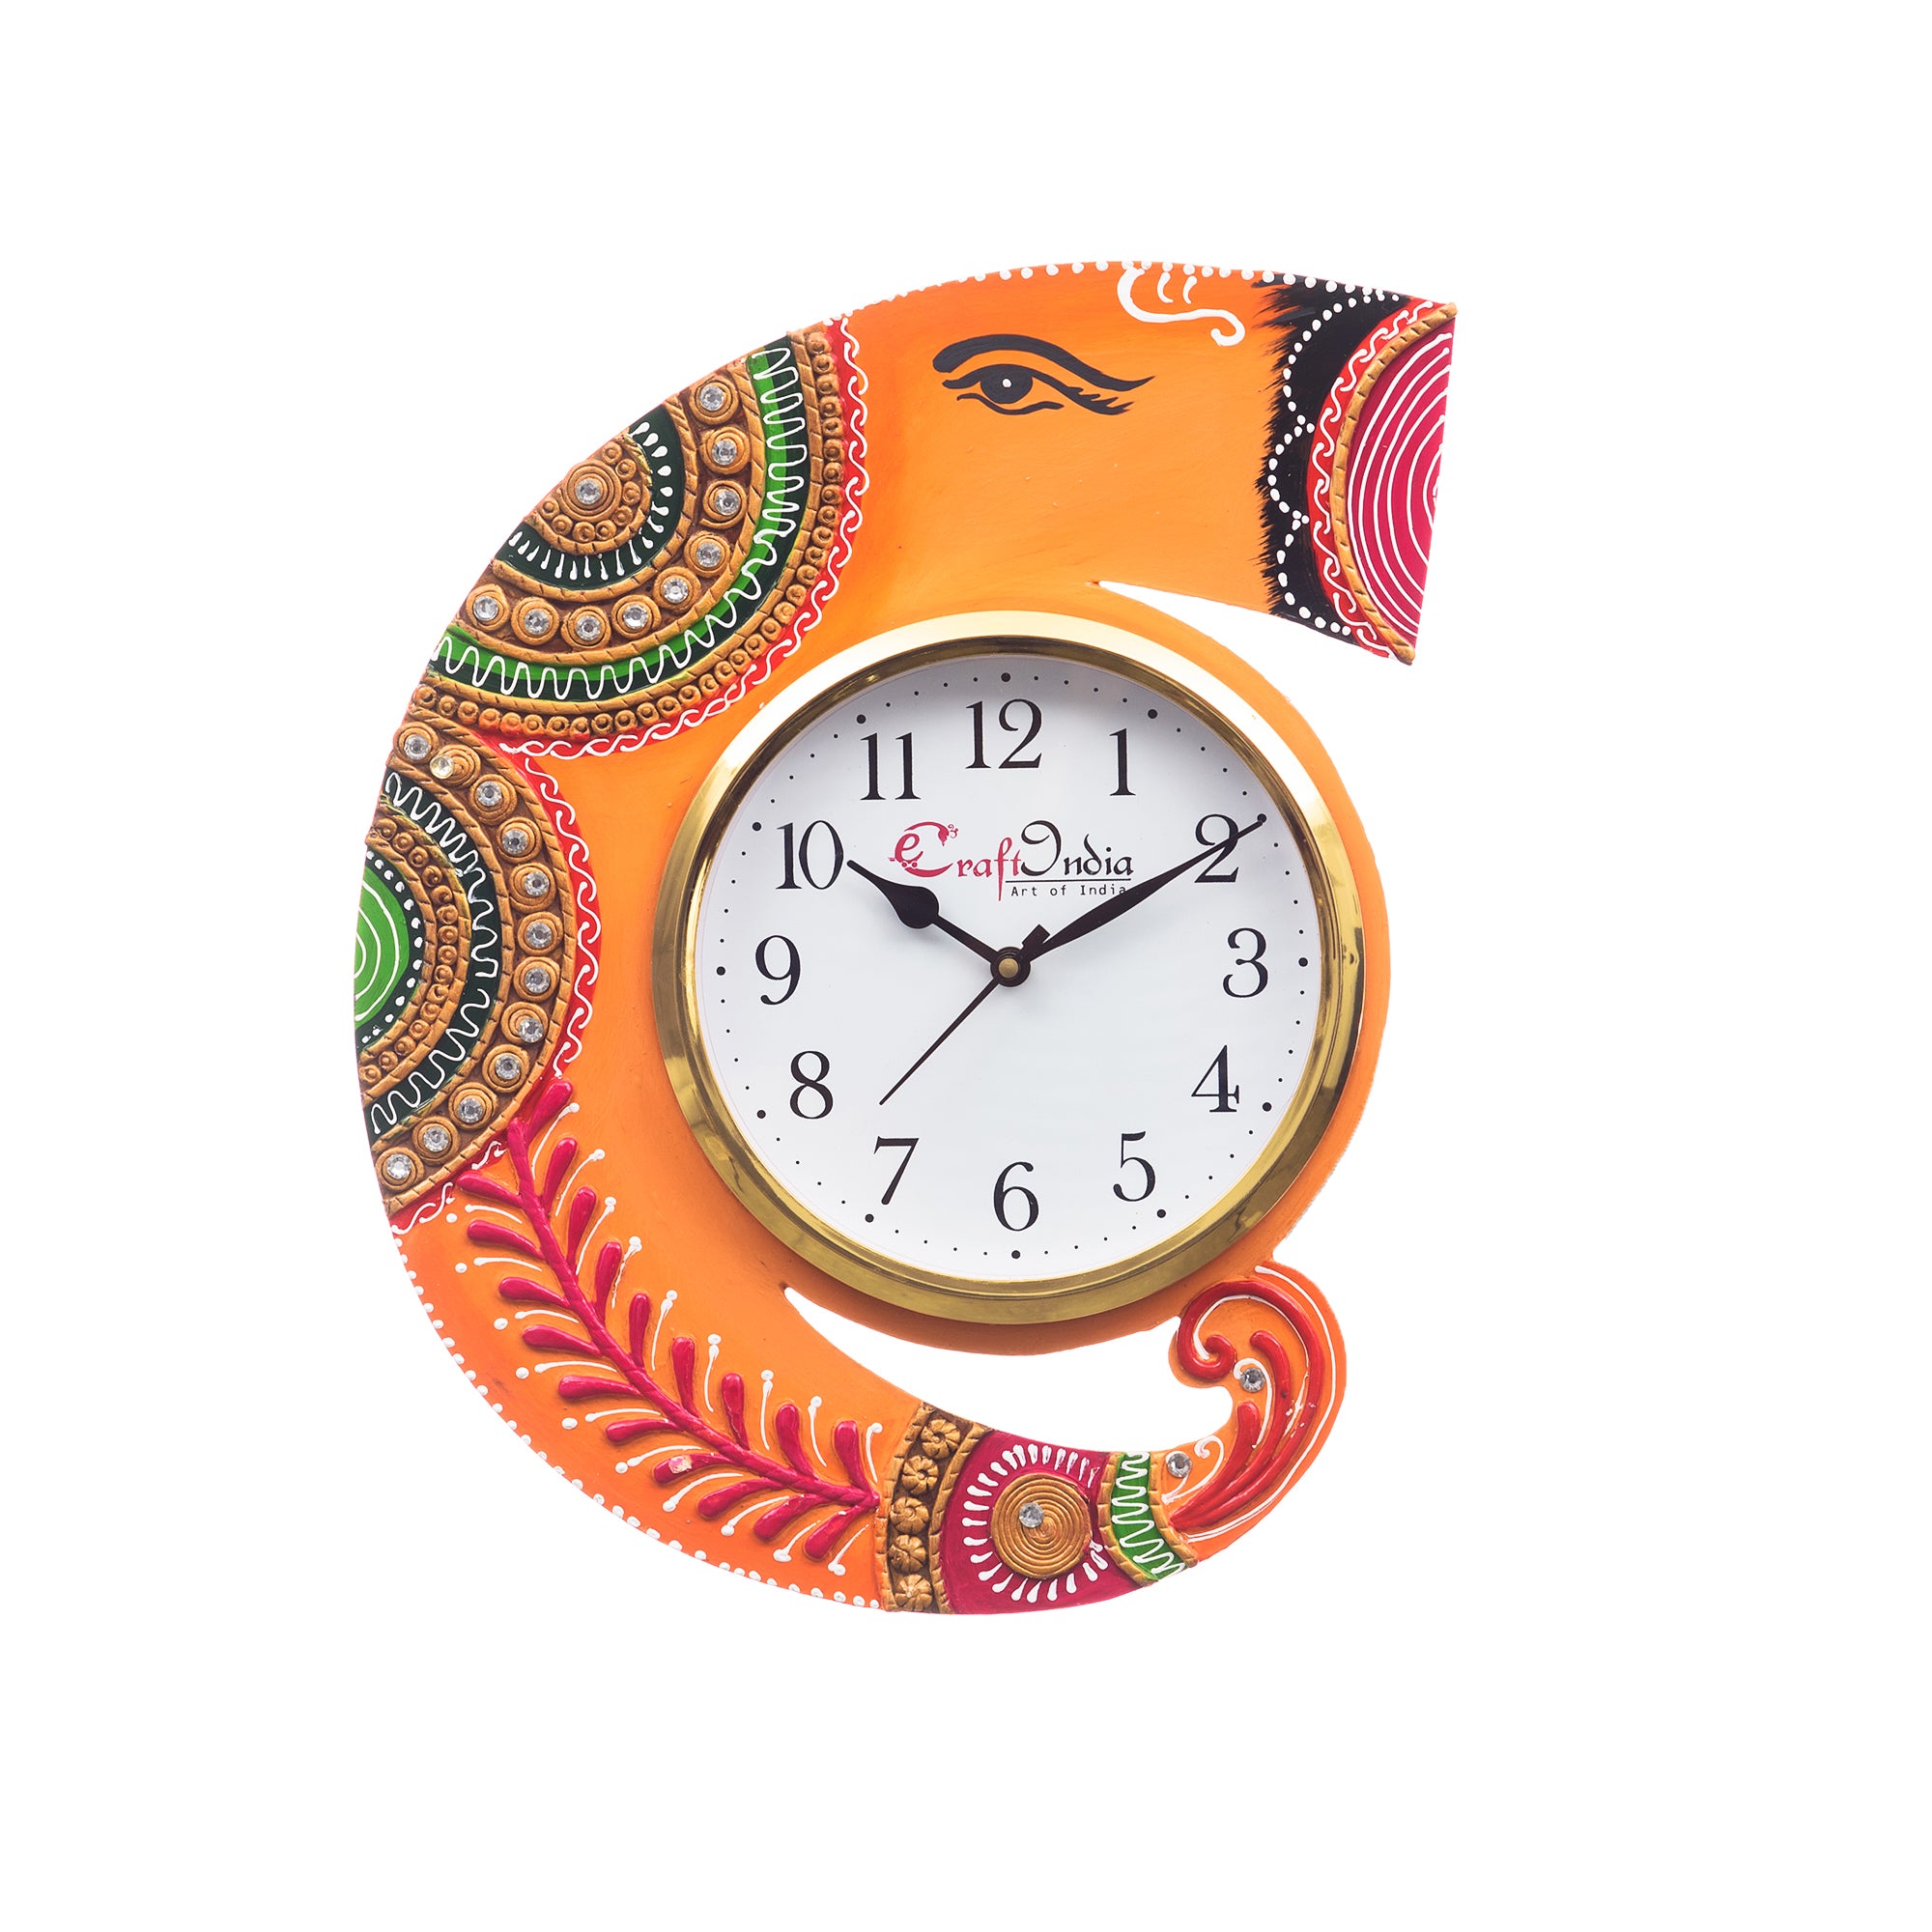 Decorative Handicrafted Paper Mache Lord Ganesha Designer Wall Clock